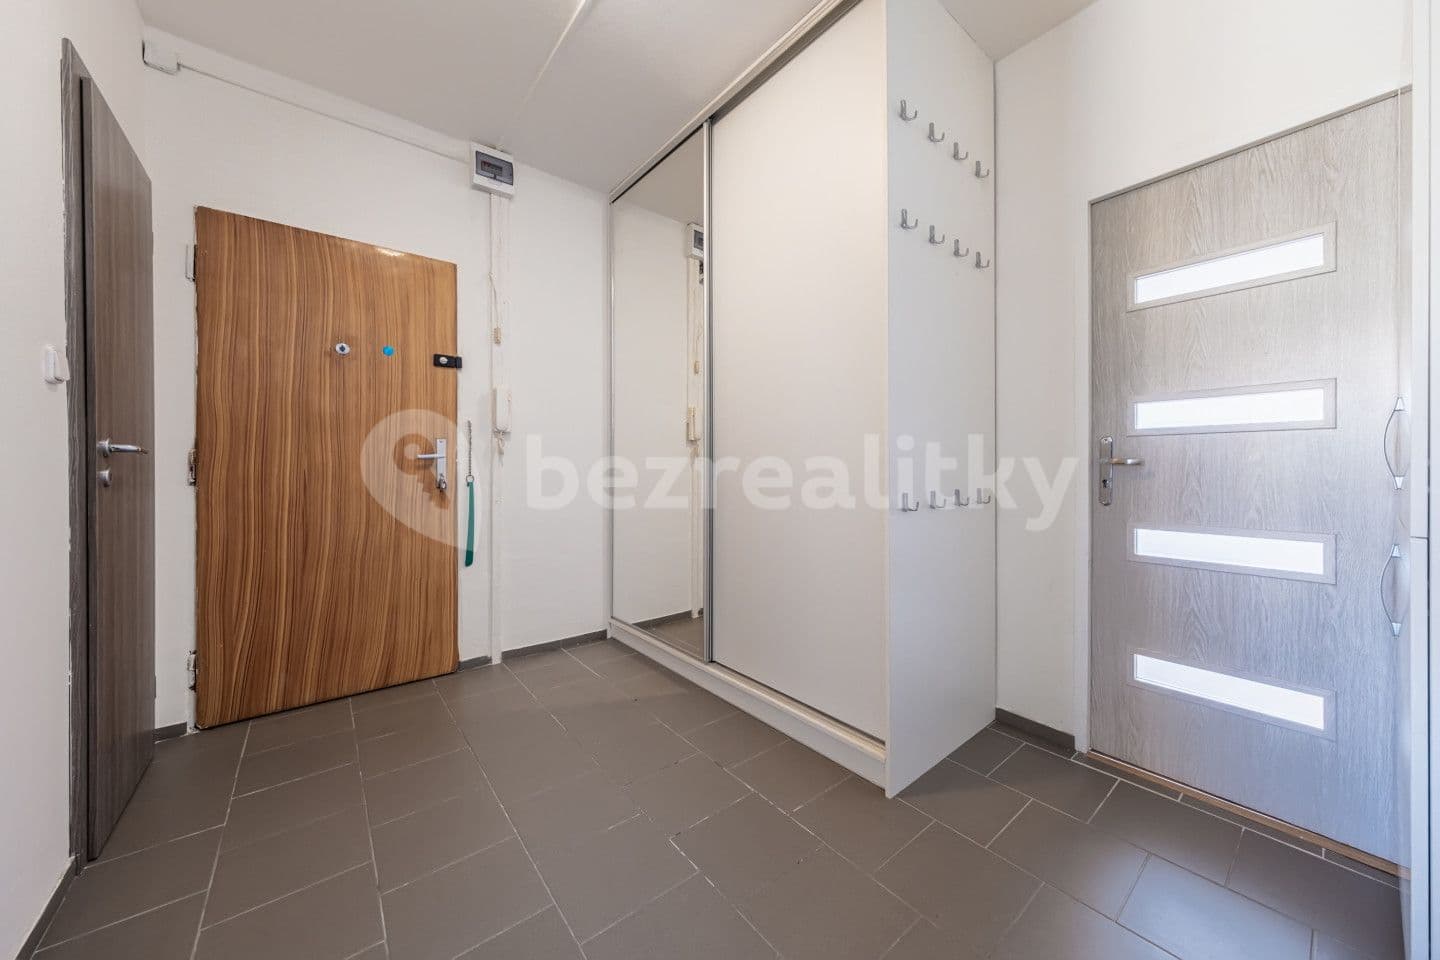 2 bedroom flat for sale, 62 m², Kostnická, Chomutov, Ústecký Region